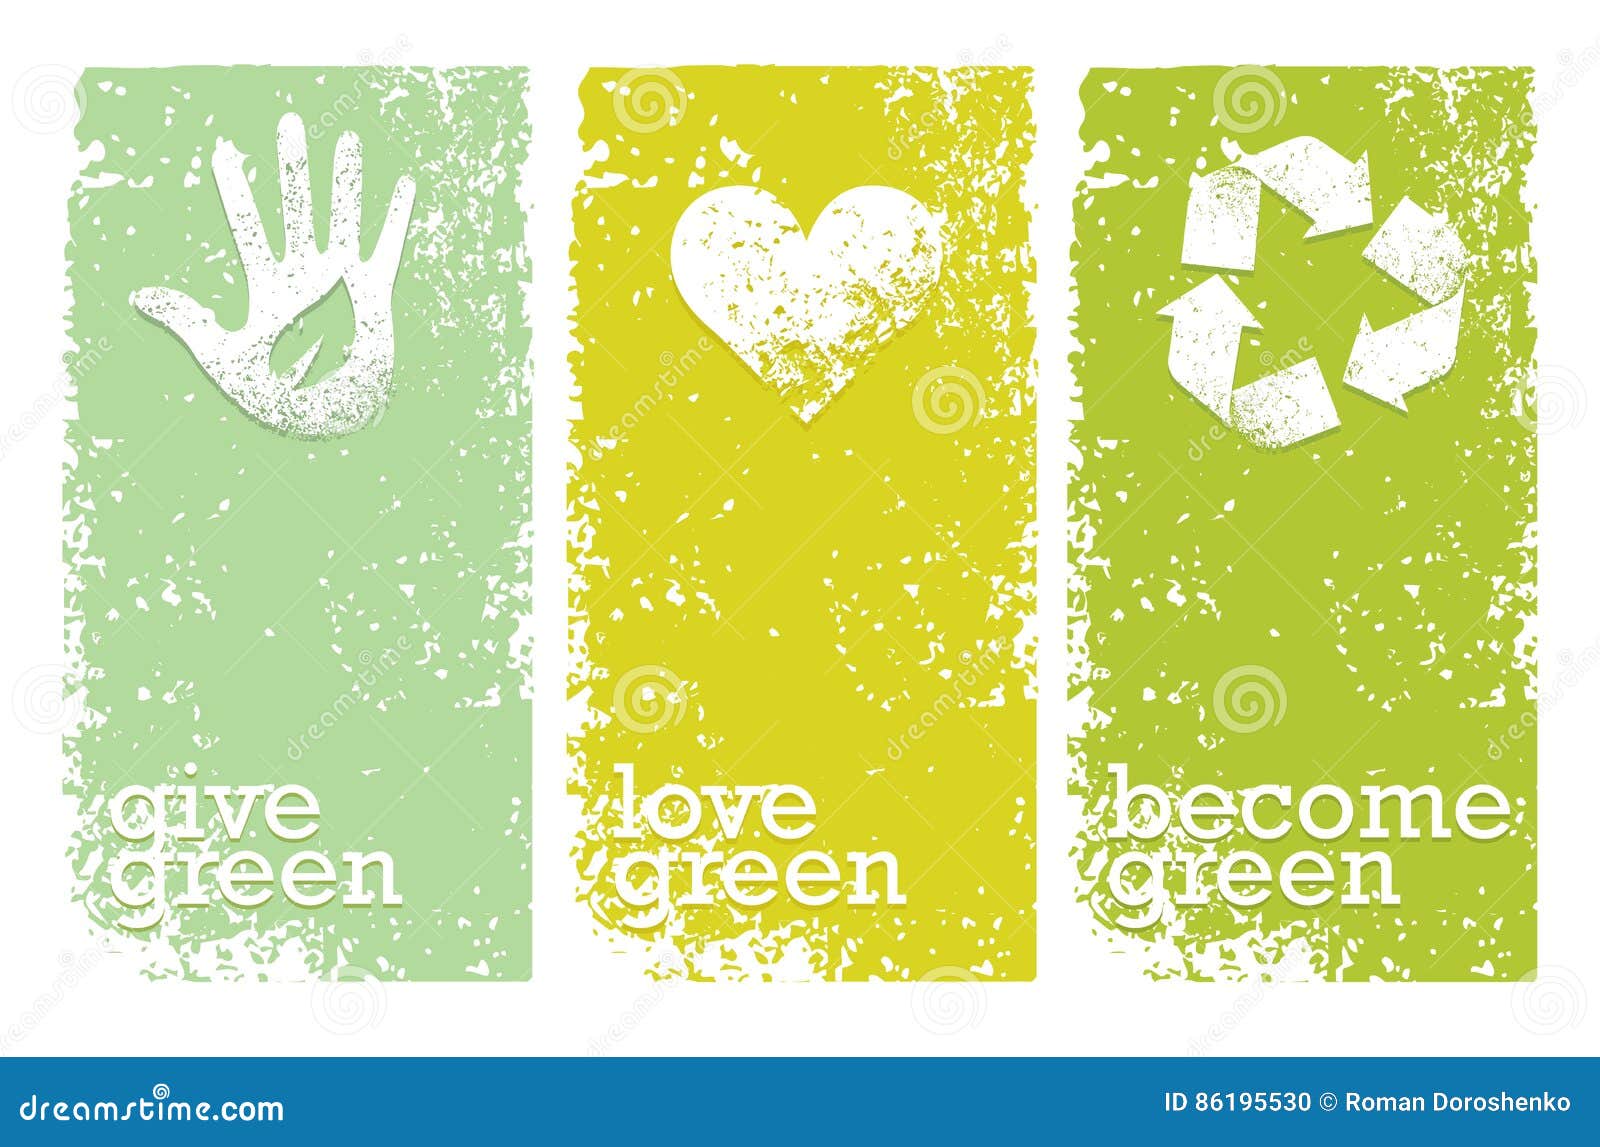 Go Green Recycle Reduce Reuse Eco Poster Concept. Vector Creative